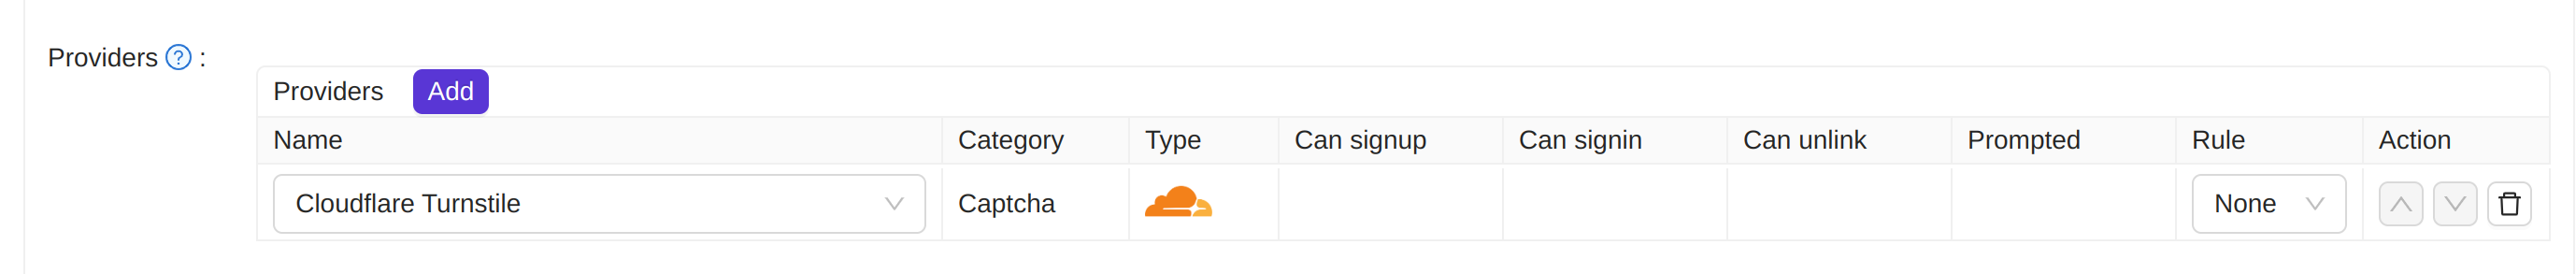 Application fournisseur Cloudflare Turnstile